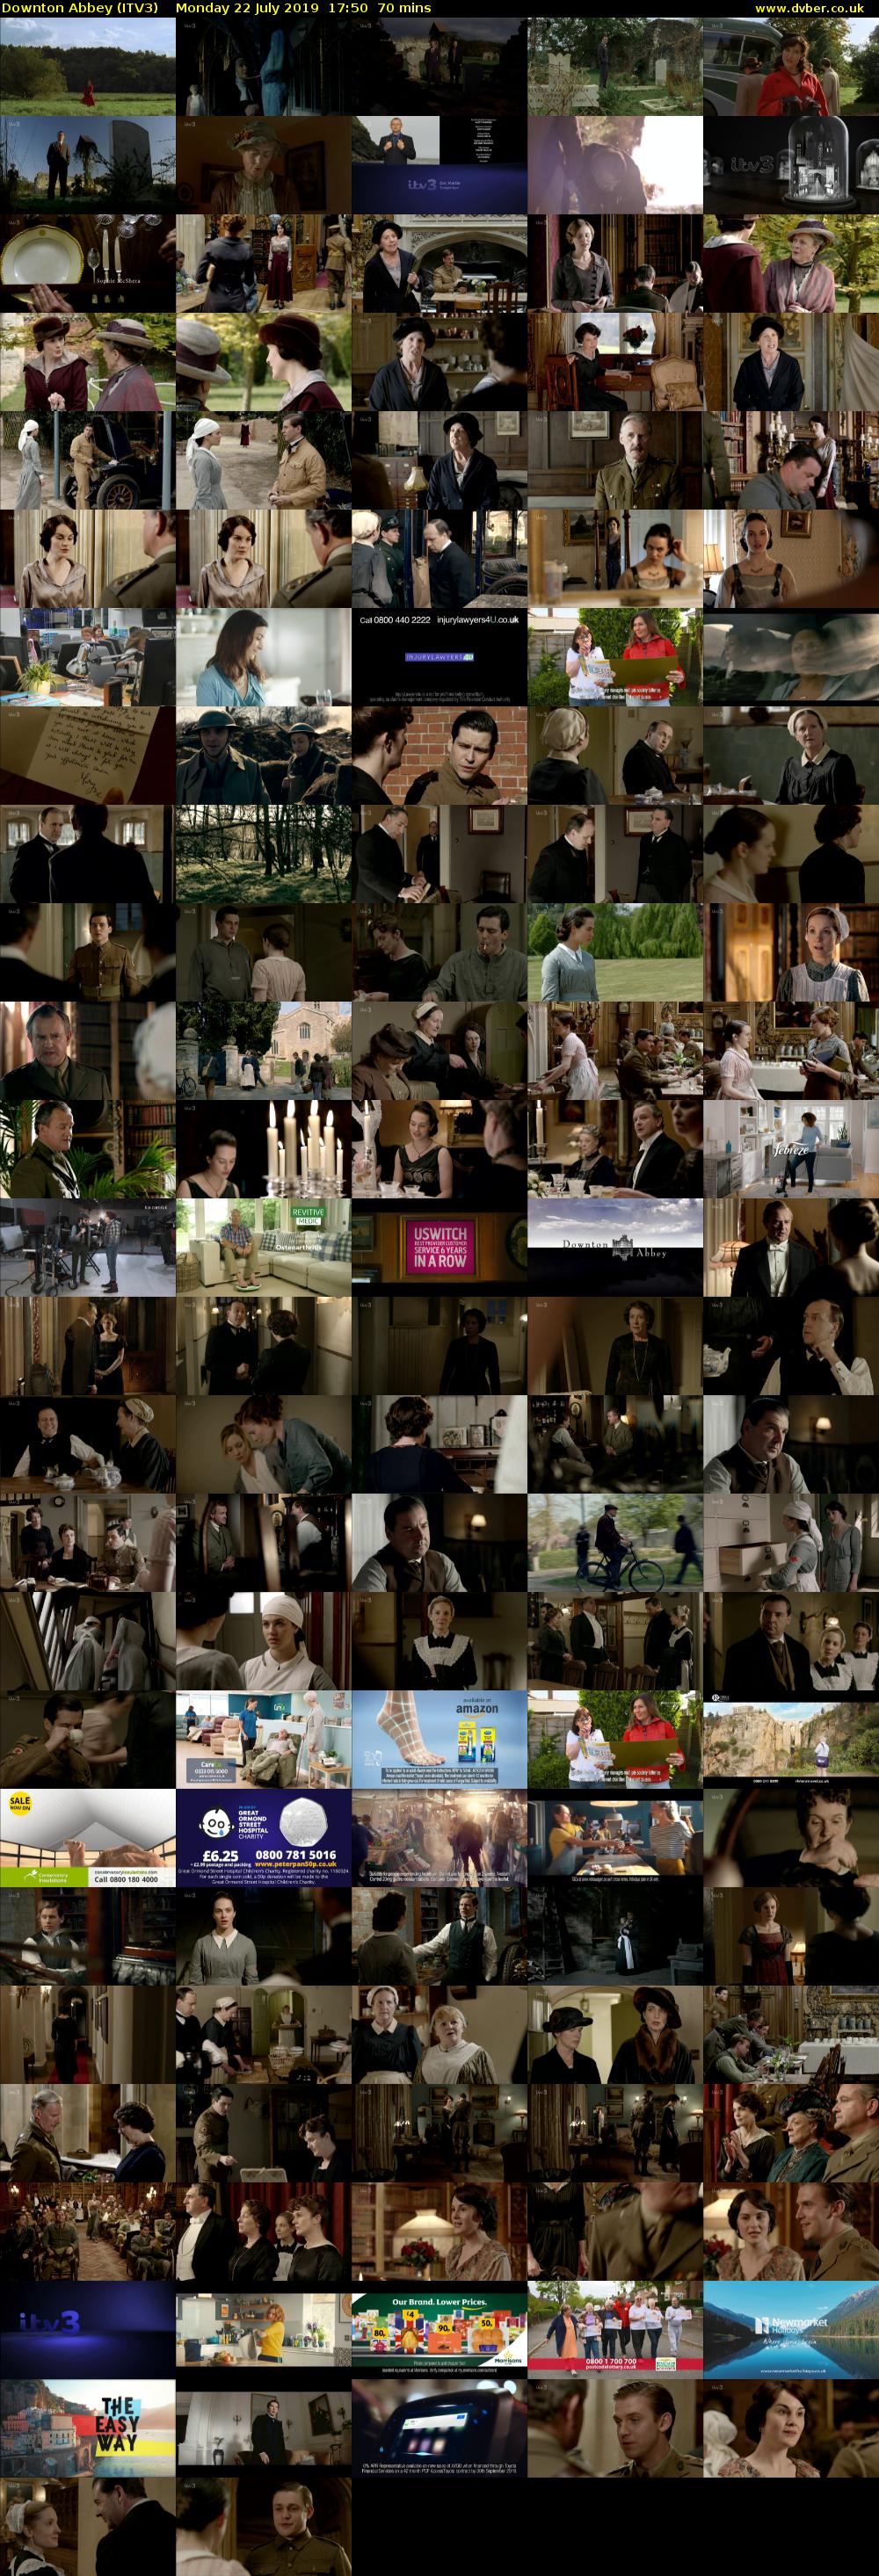 Downton Abbey (ITV3) Monday 22 July 2019 17:50 - 19:00